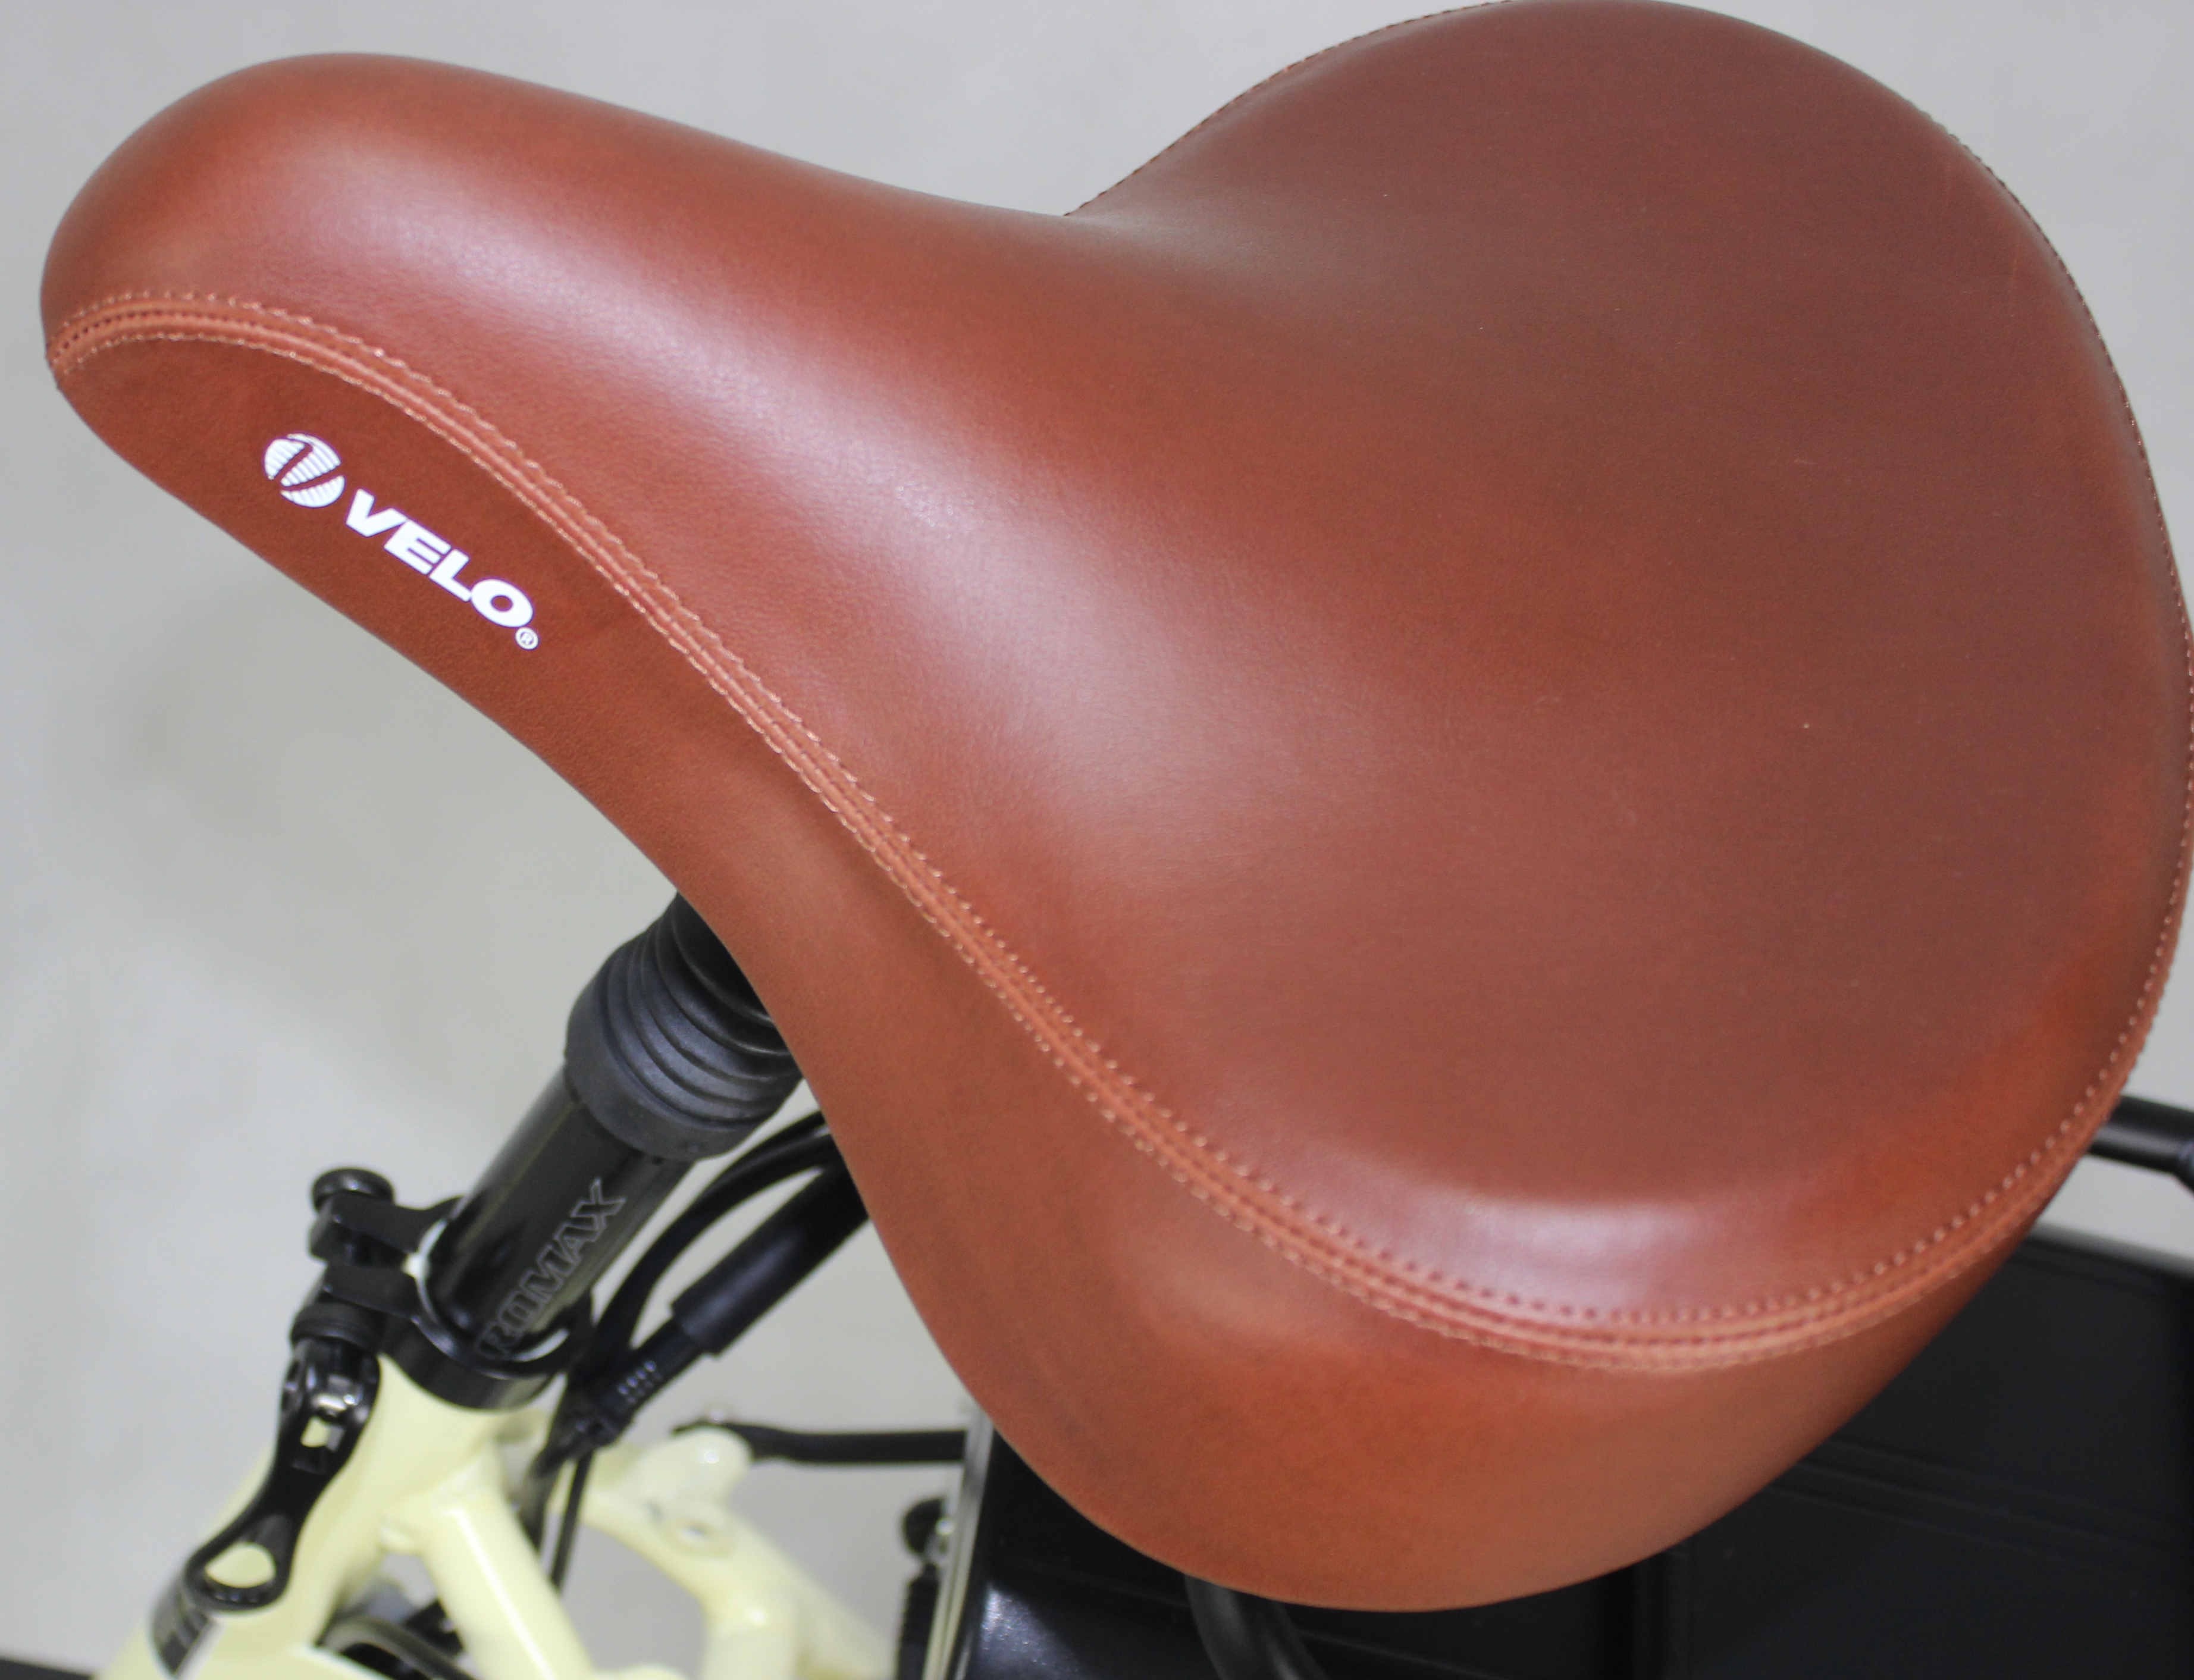 Velo Seat for Mirrorstone e-Bike